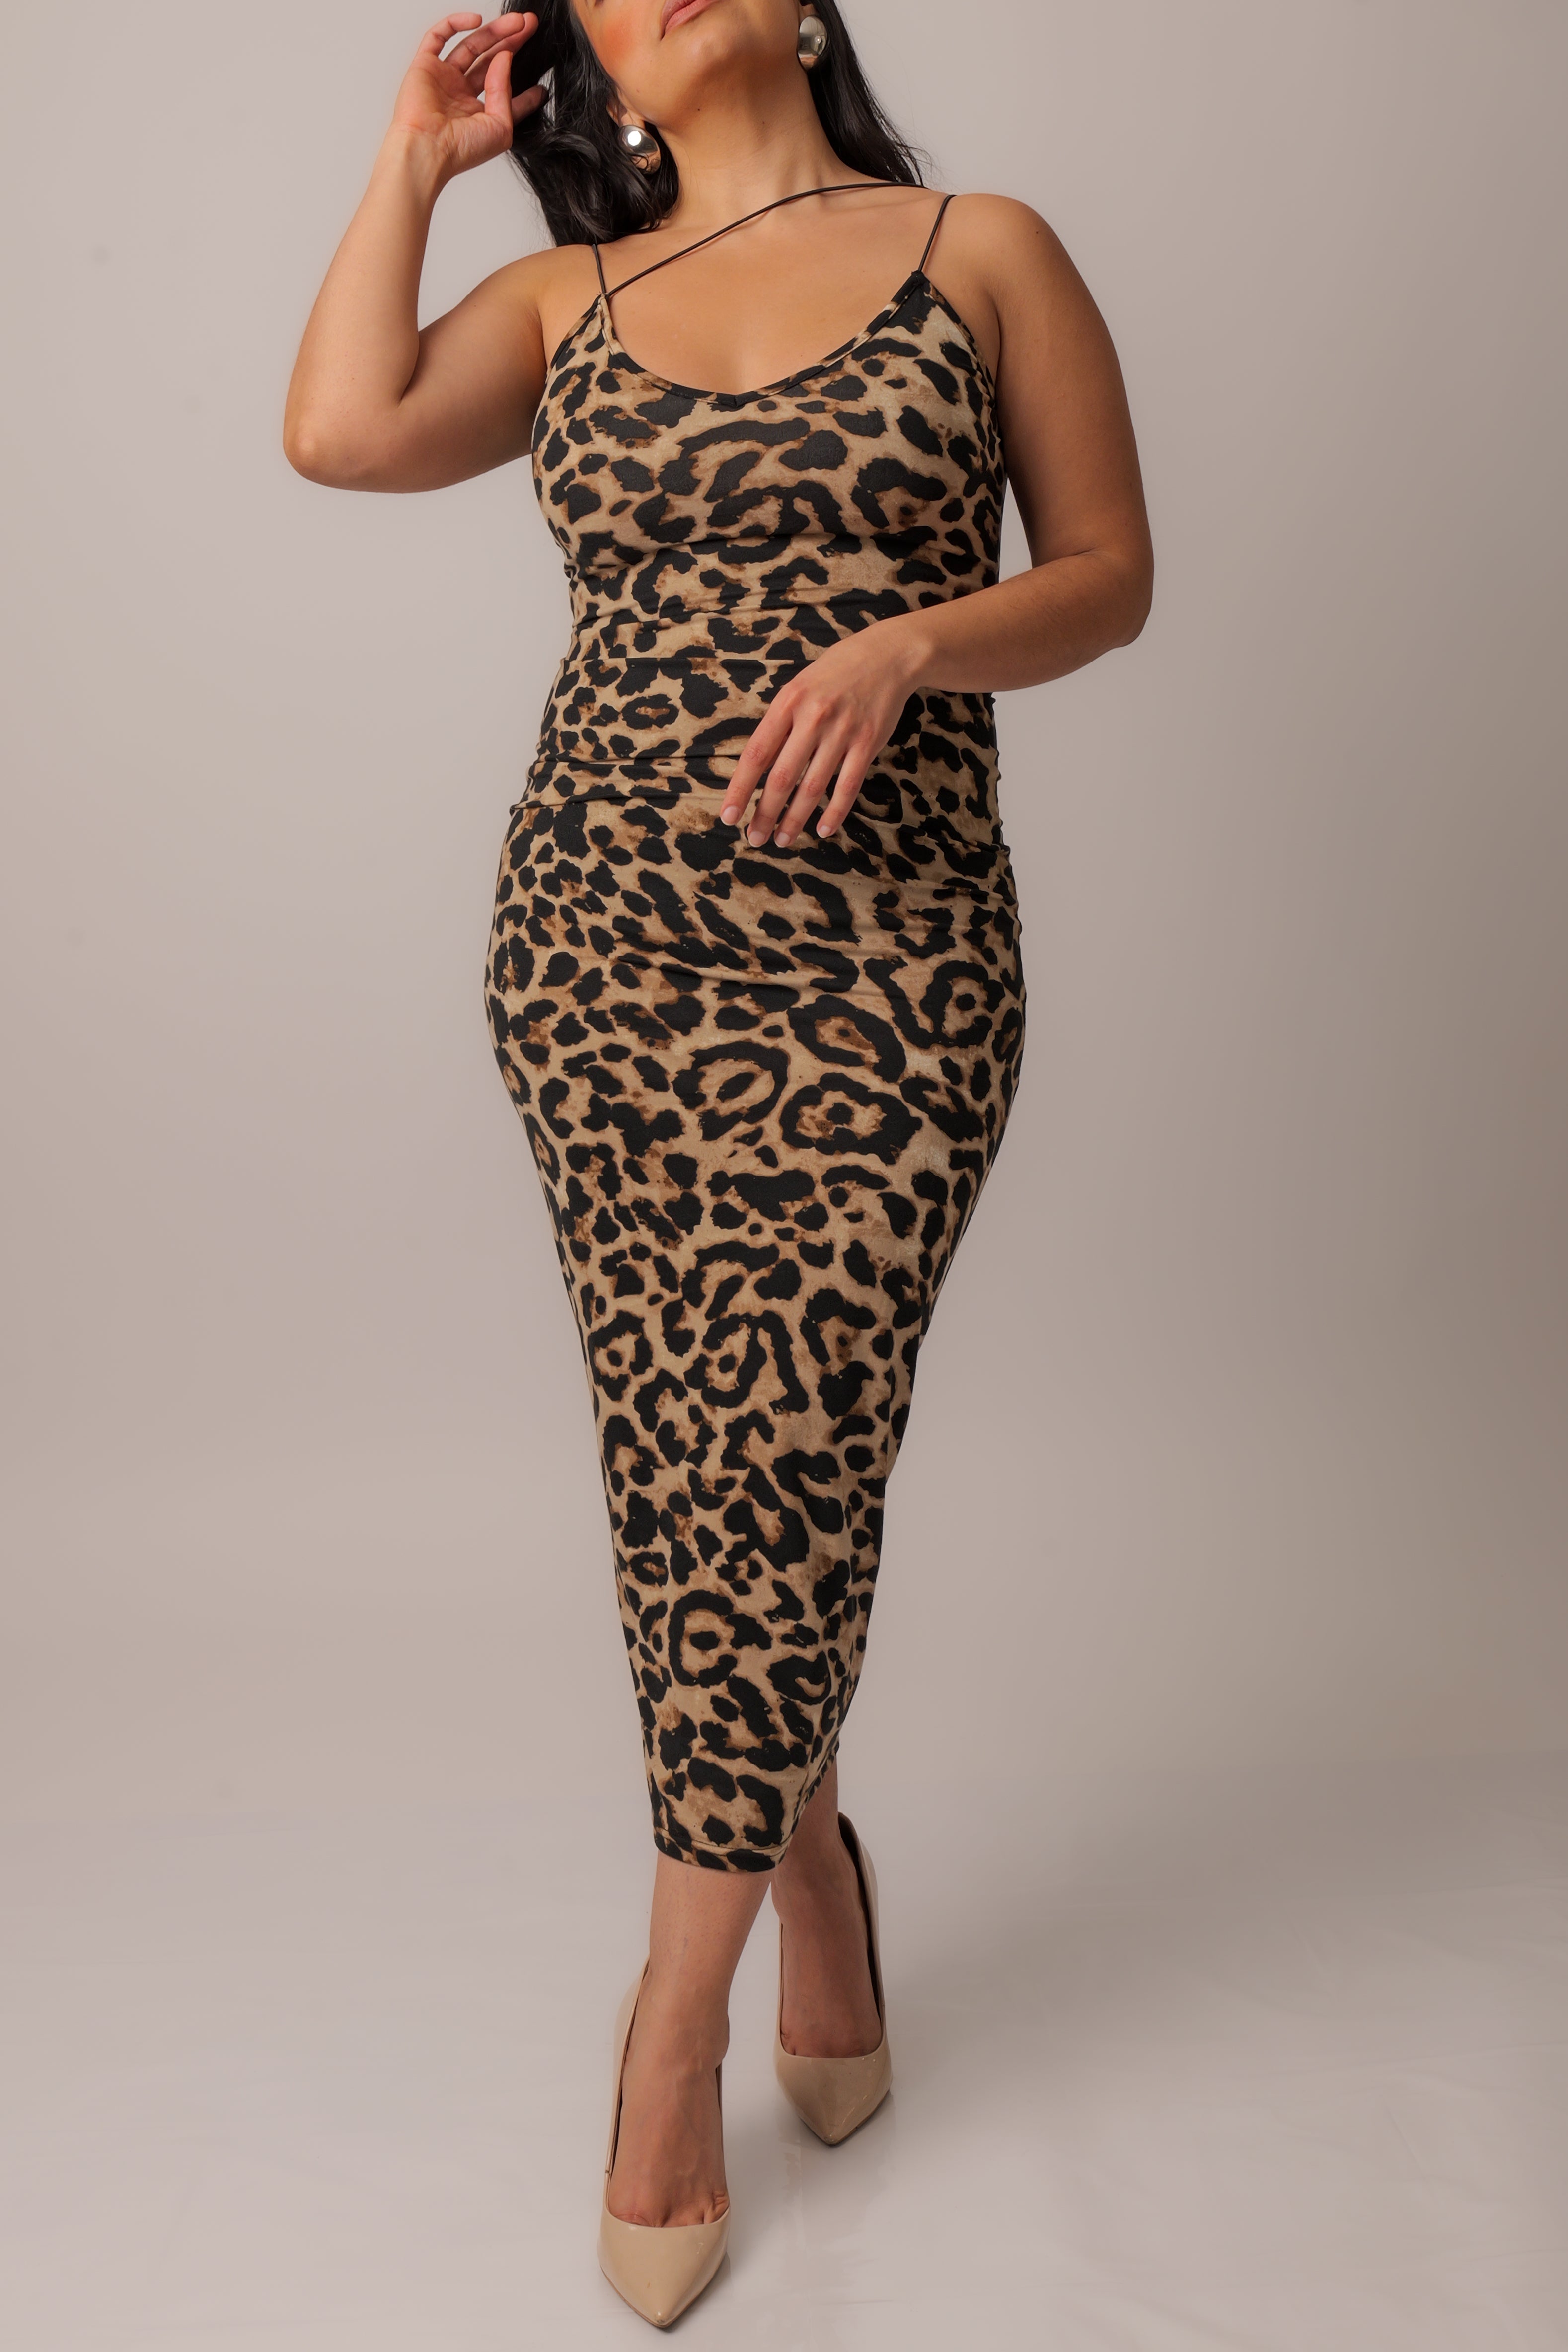 Cheetah Print Midi dress